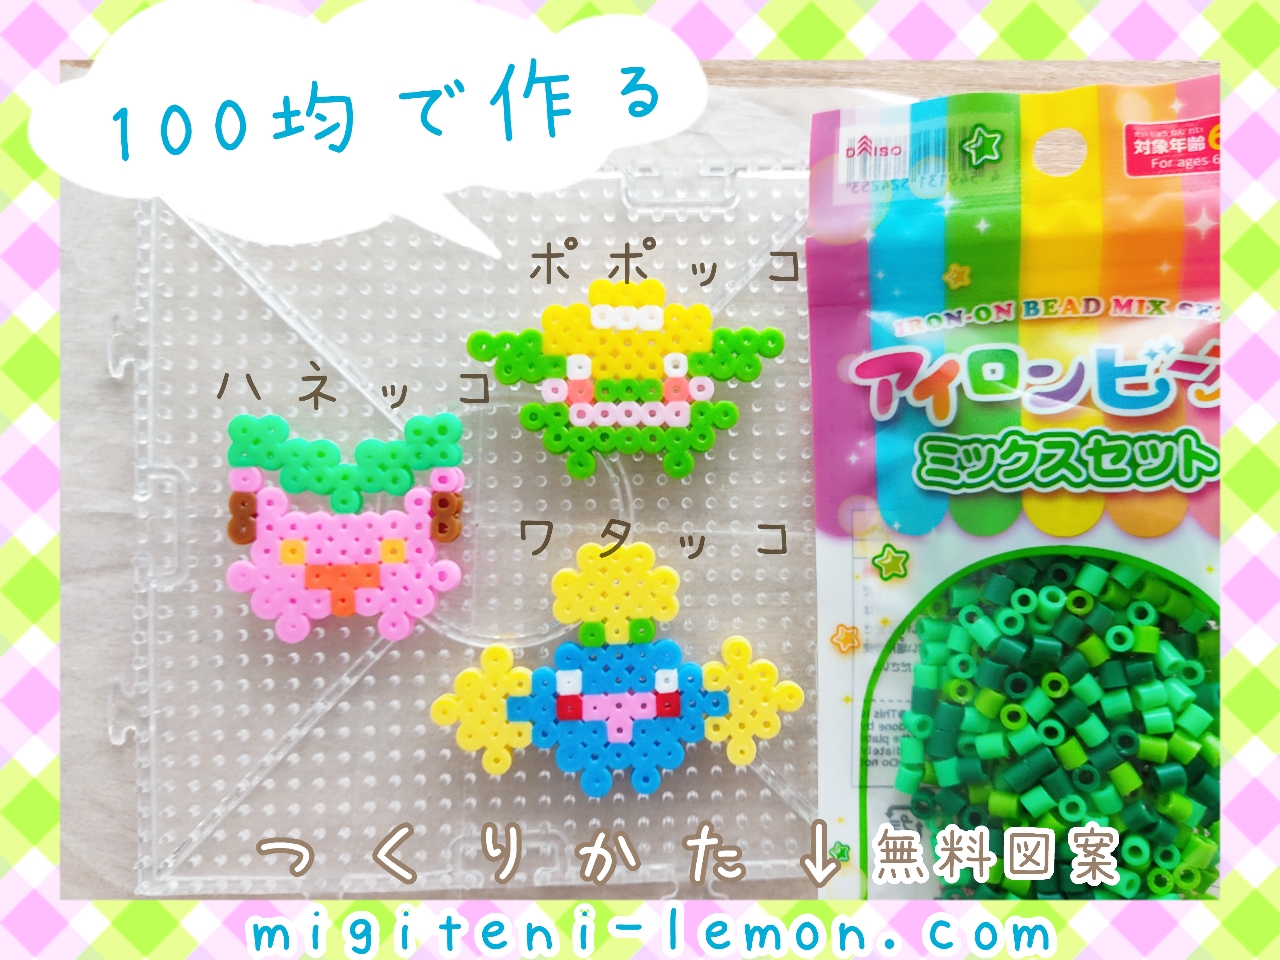 hanecco-hoppip-popokko-watacco-jumpluff-pokemon-handmade-iron-beads-daiso-small-square-kawaii-green-100kin-free-zuan-kids